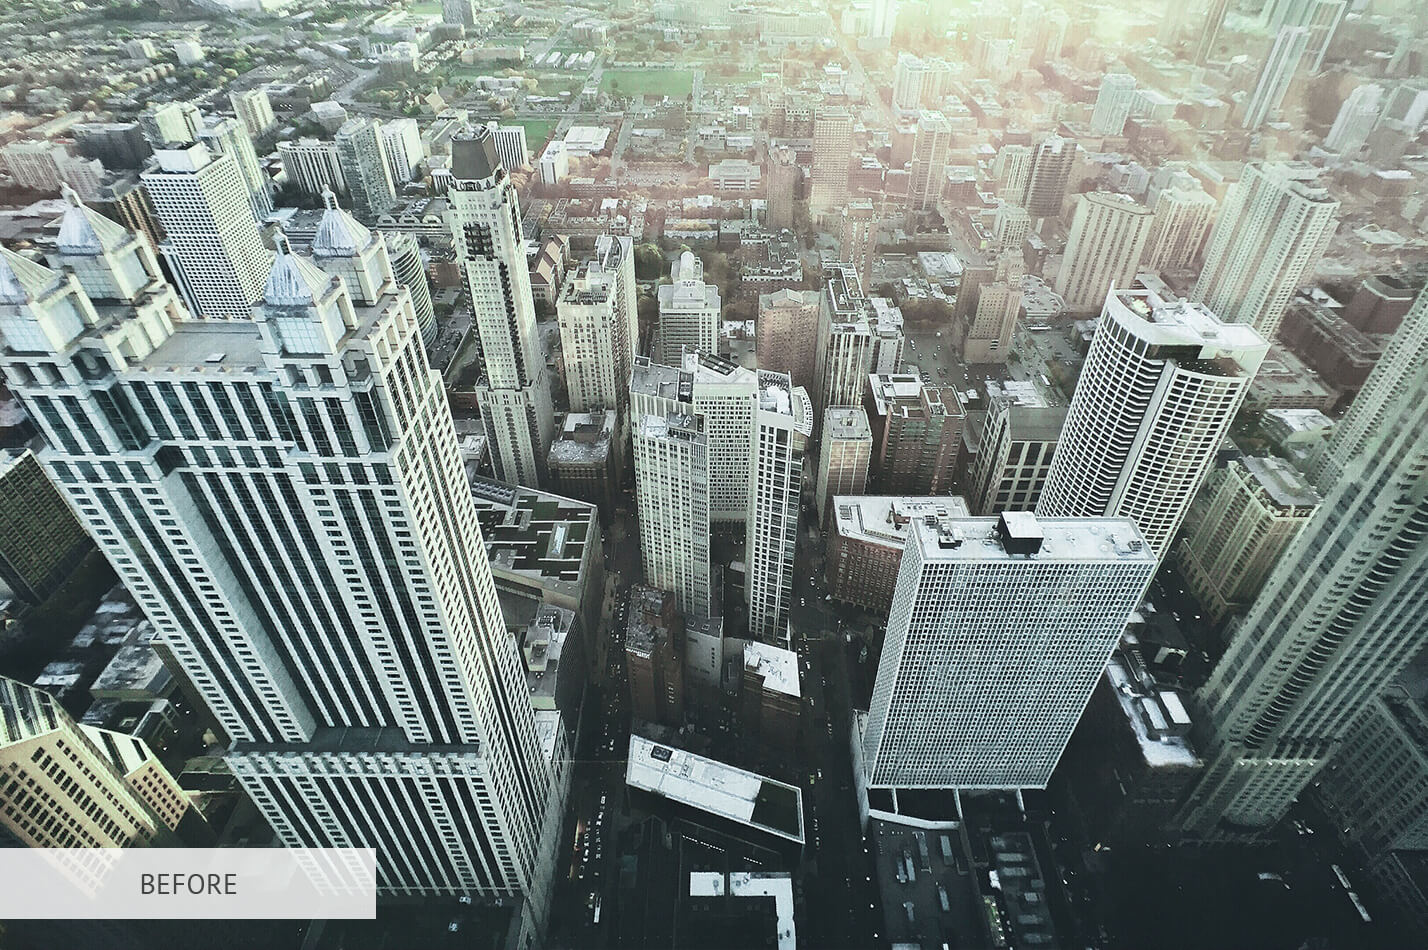 download cities skylines for mac